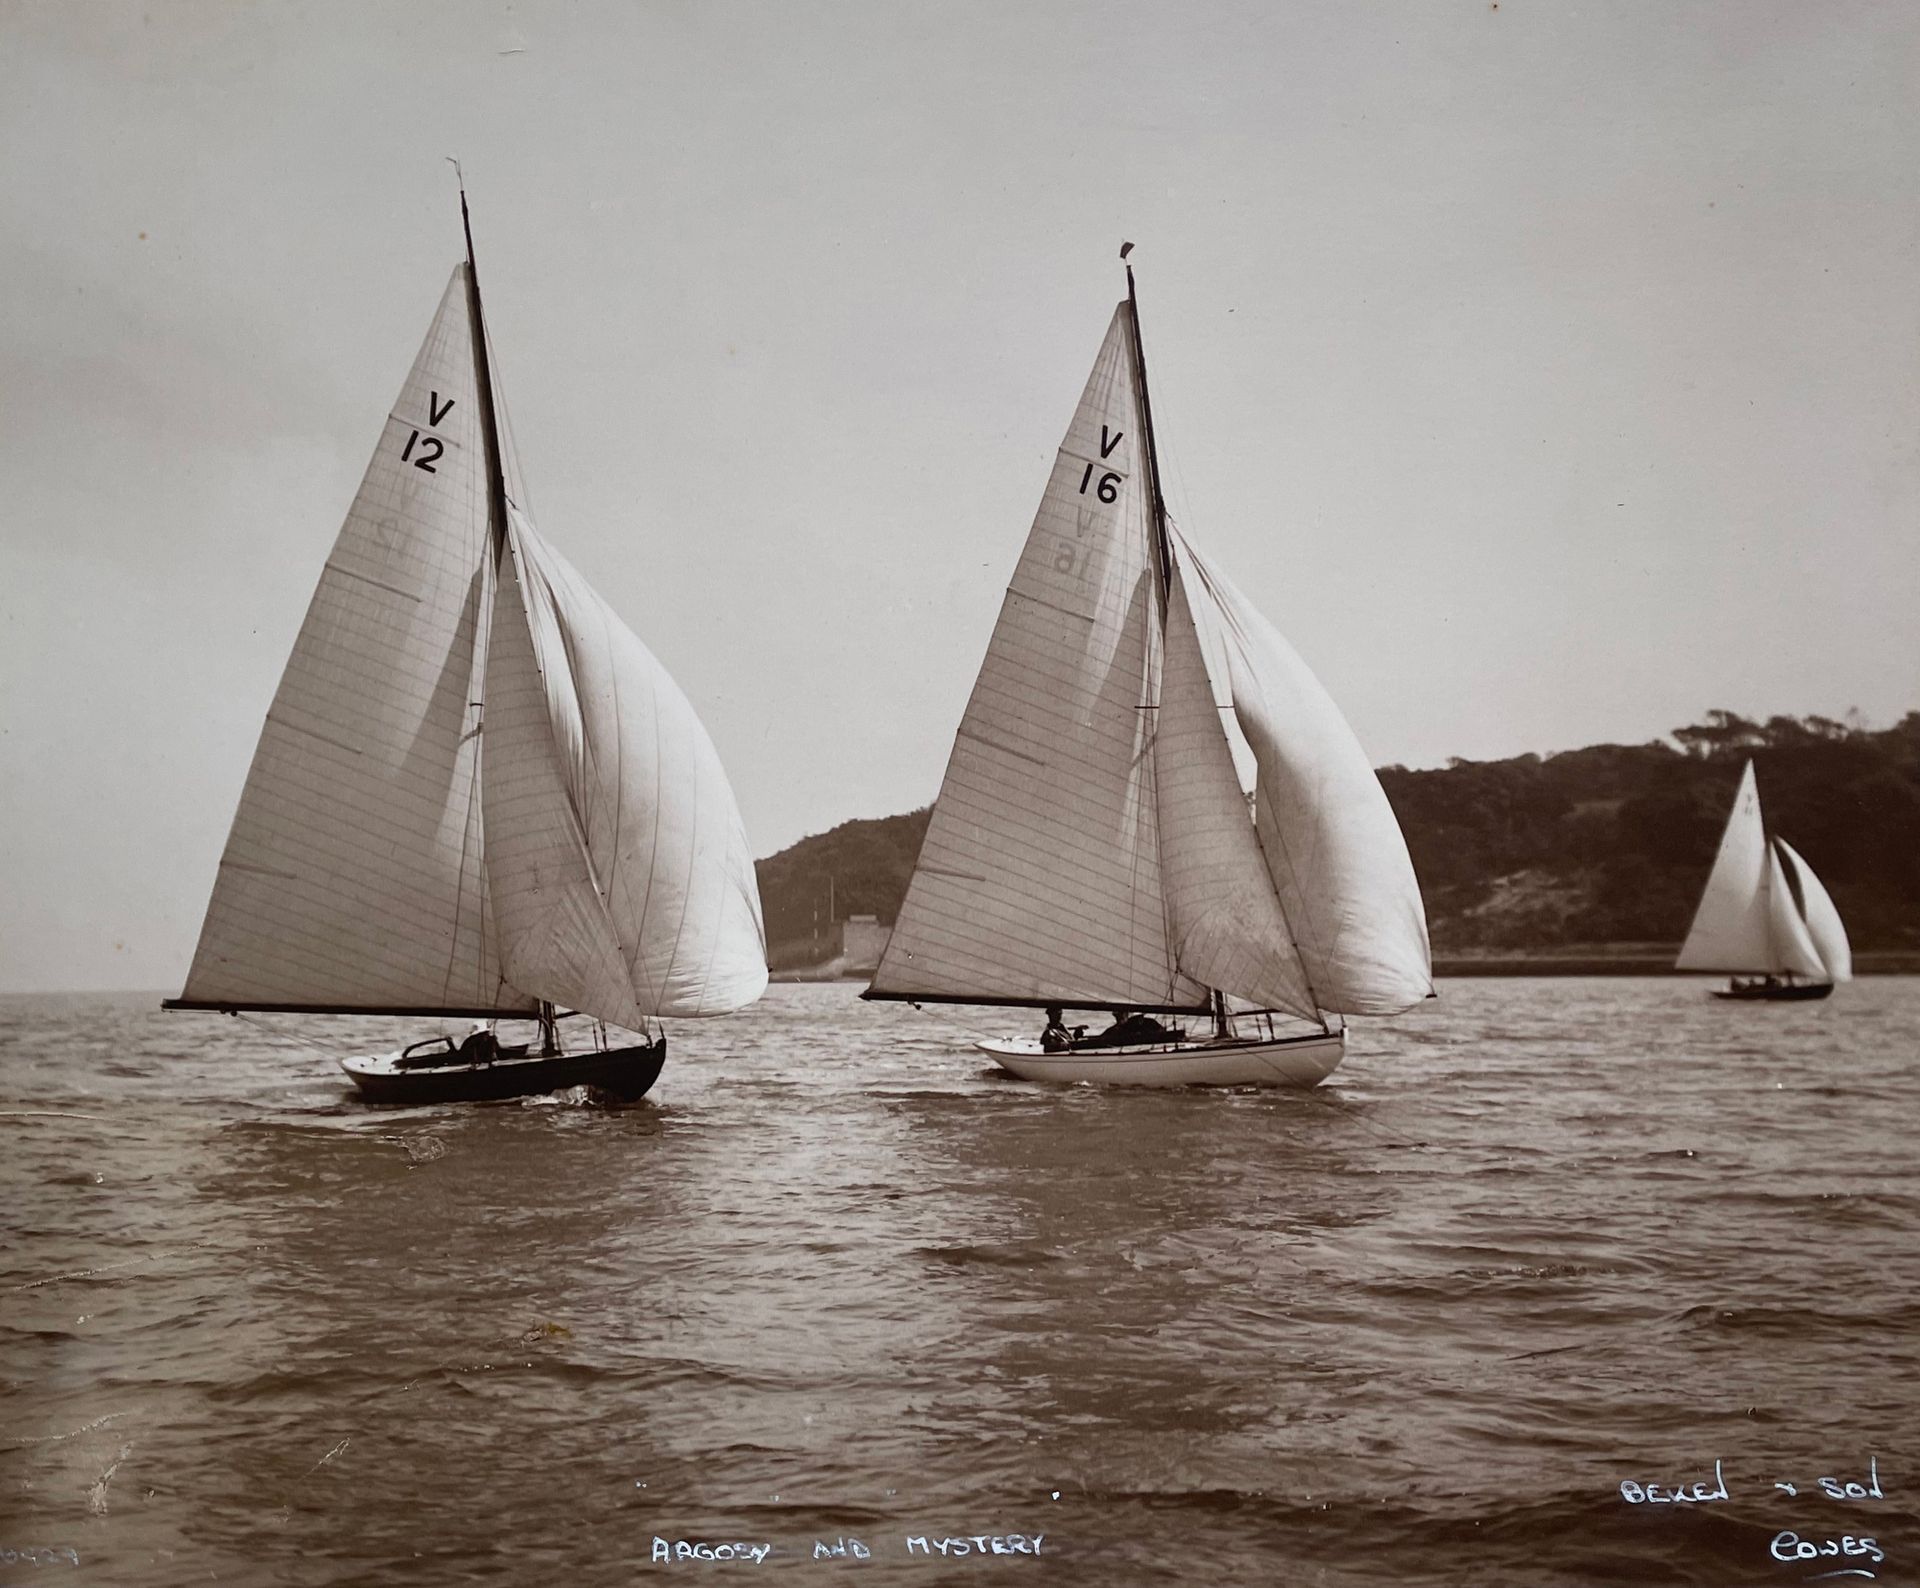 BEKEN & SON 
Caper regatta, 1965
Argosy and mystery
Deux tirages argentiques, si&hellip;